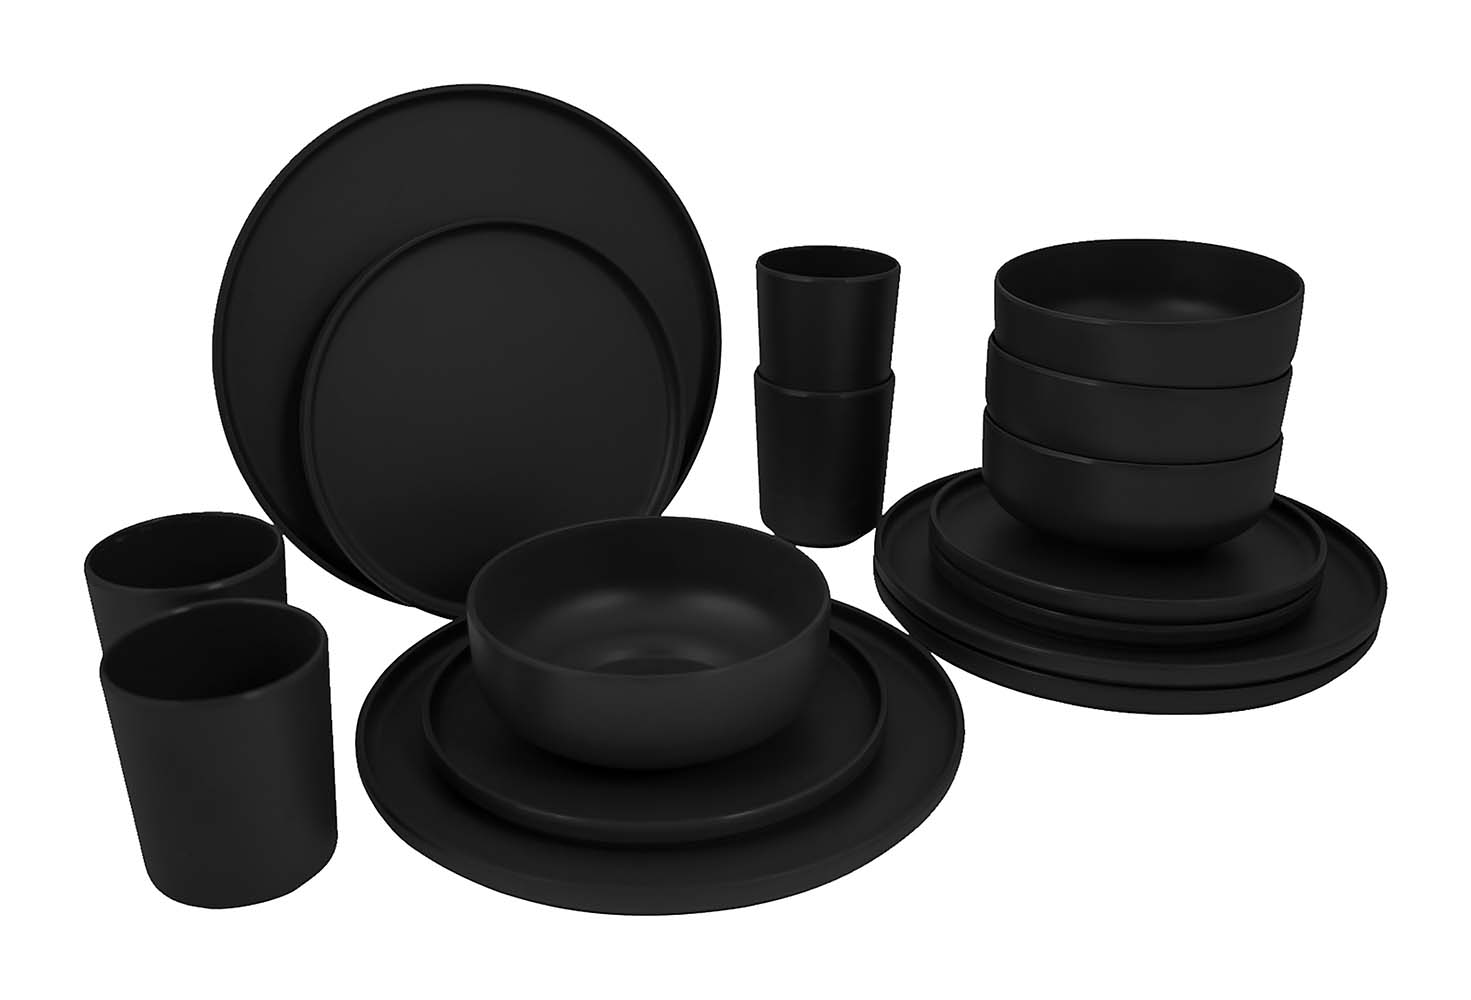 Bo-Camp - Industrial collection - Tableware - Patom - Melamine - 16 Pieces - Black